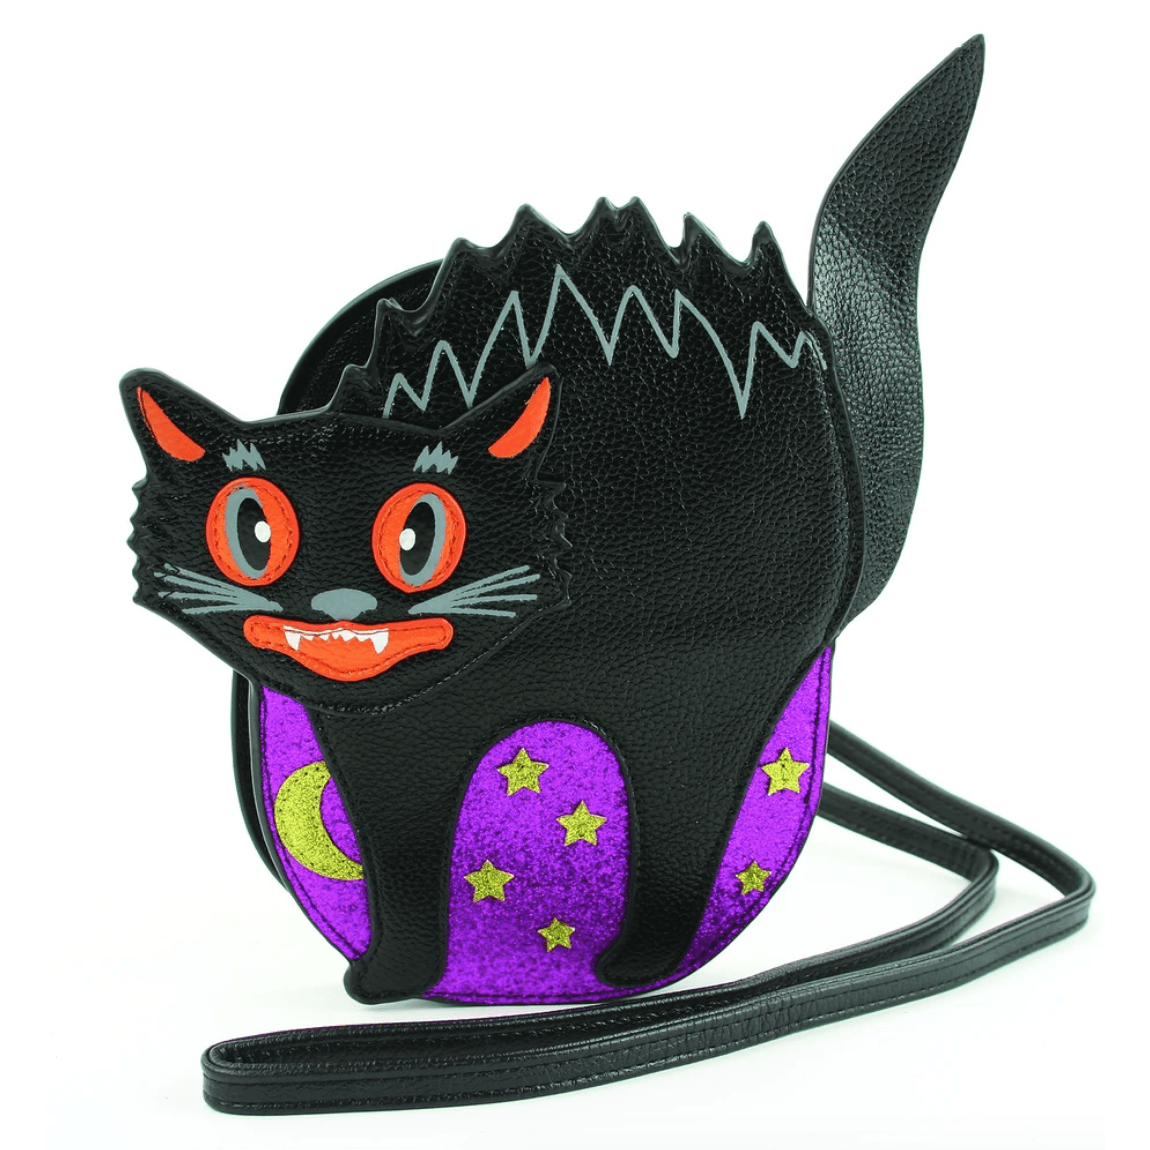 Sleepyville Critters Scary Black Cat Crossbody Bag